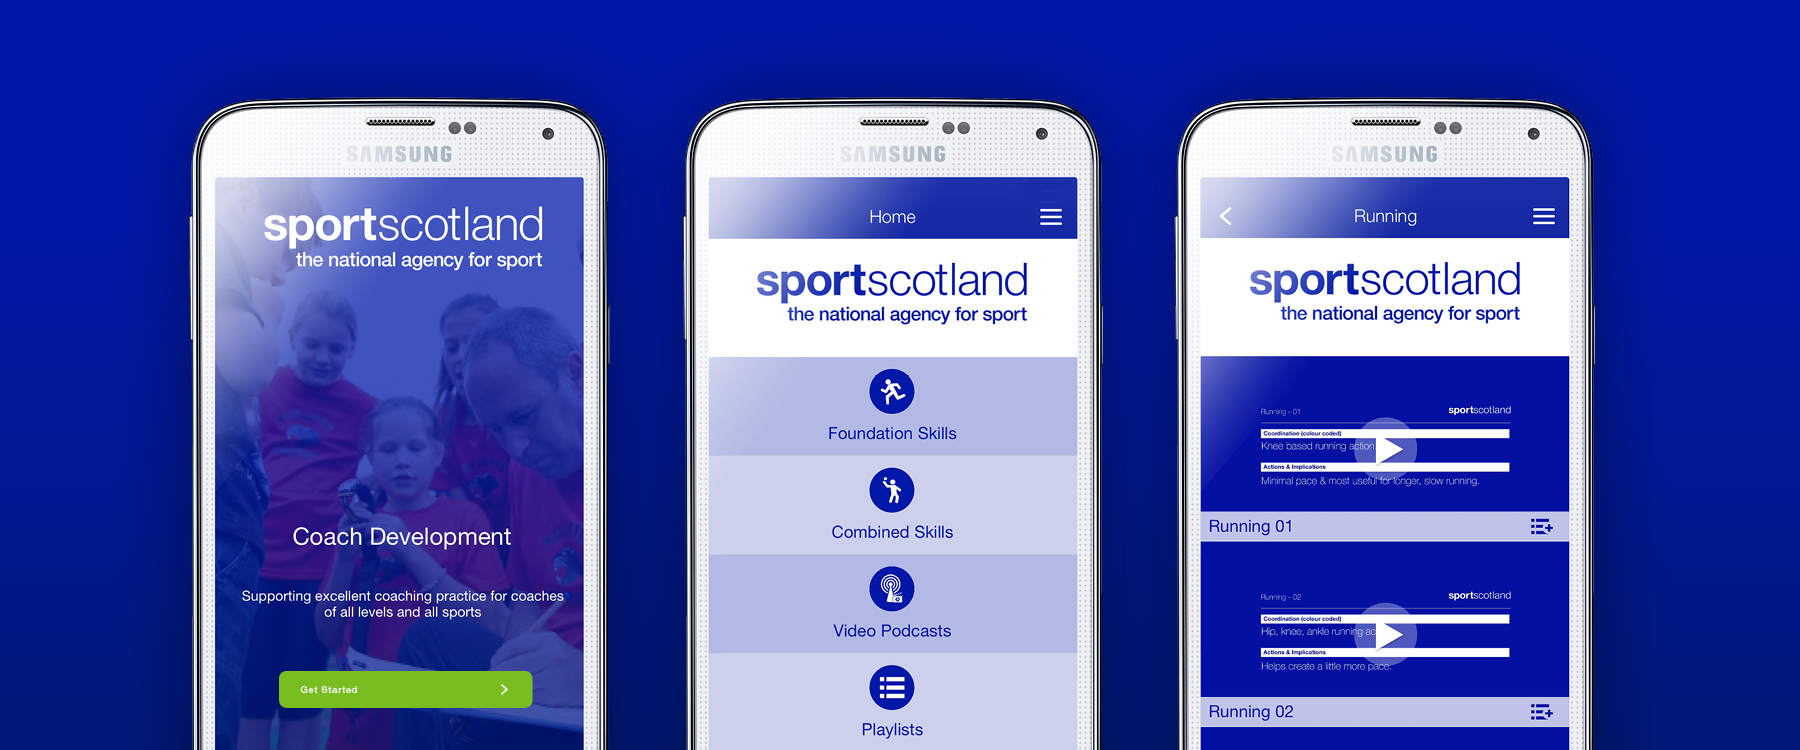 Sport Scotland App 1800x750 Main Image